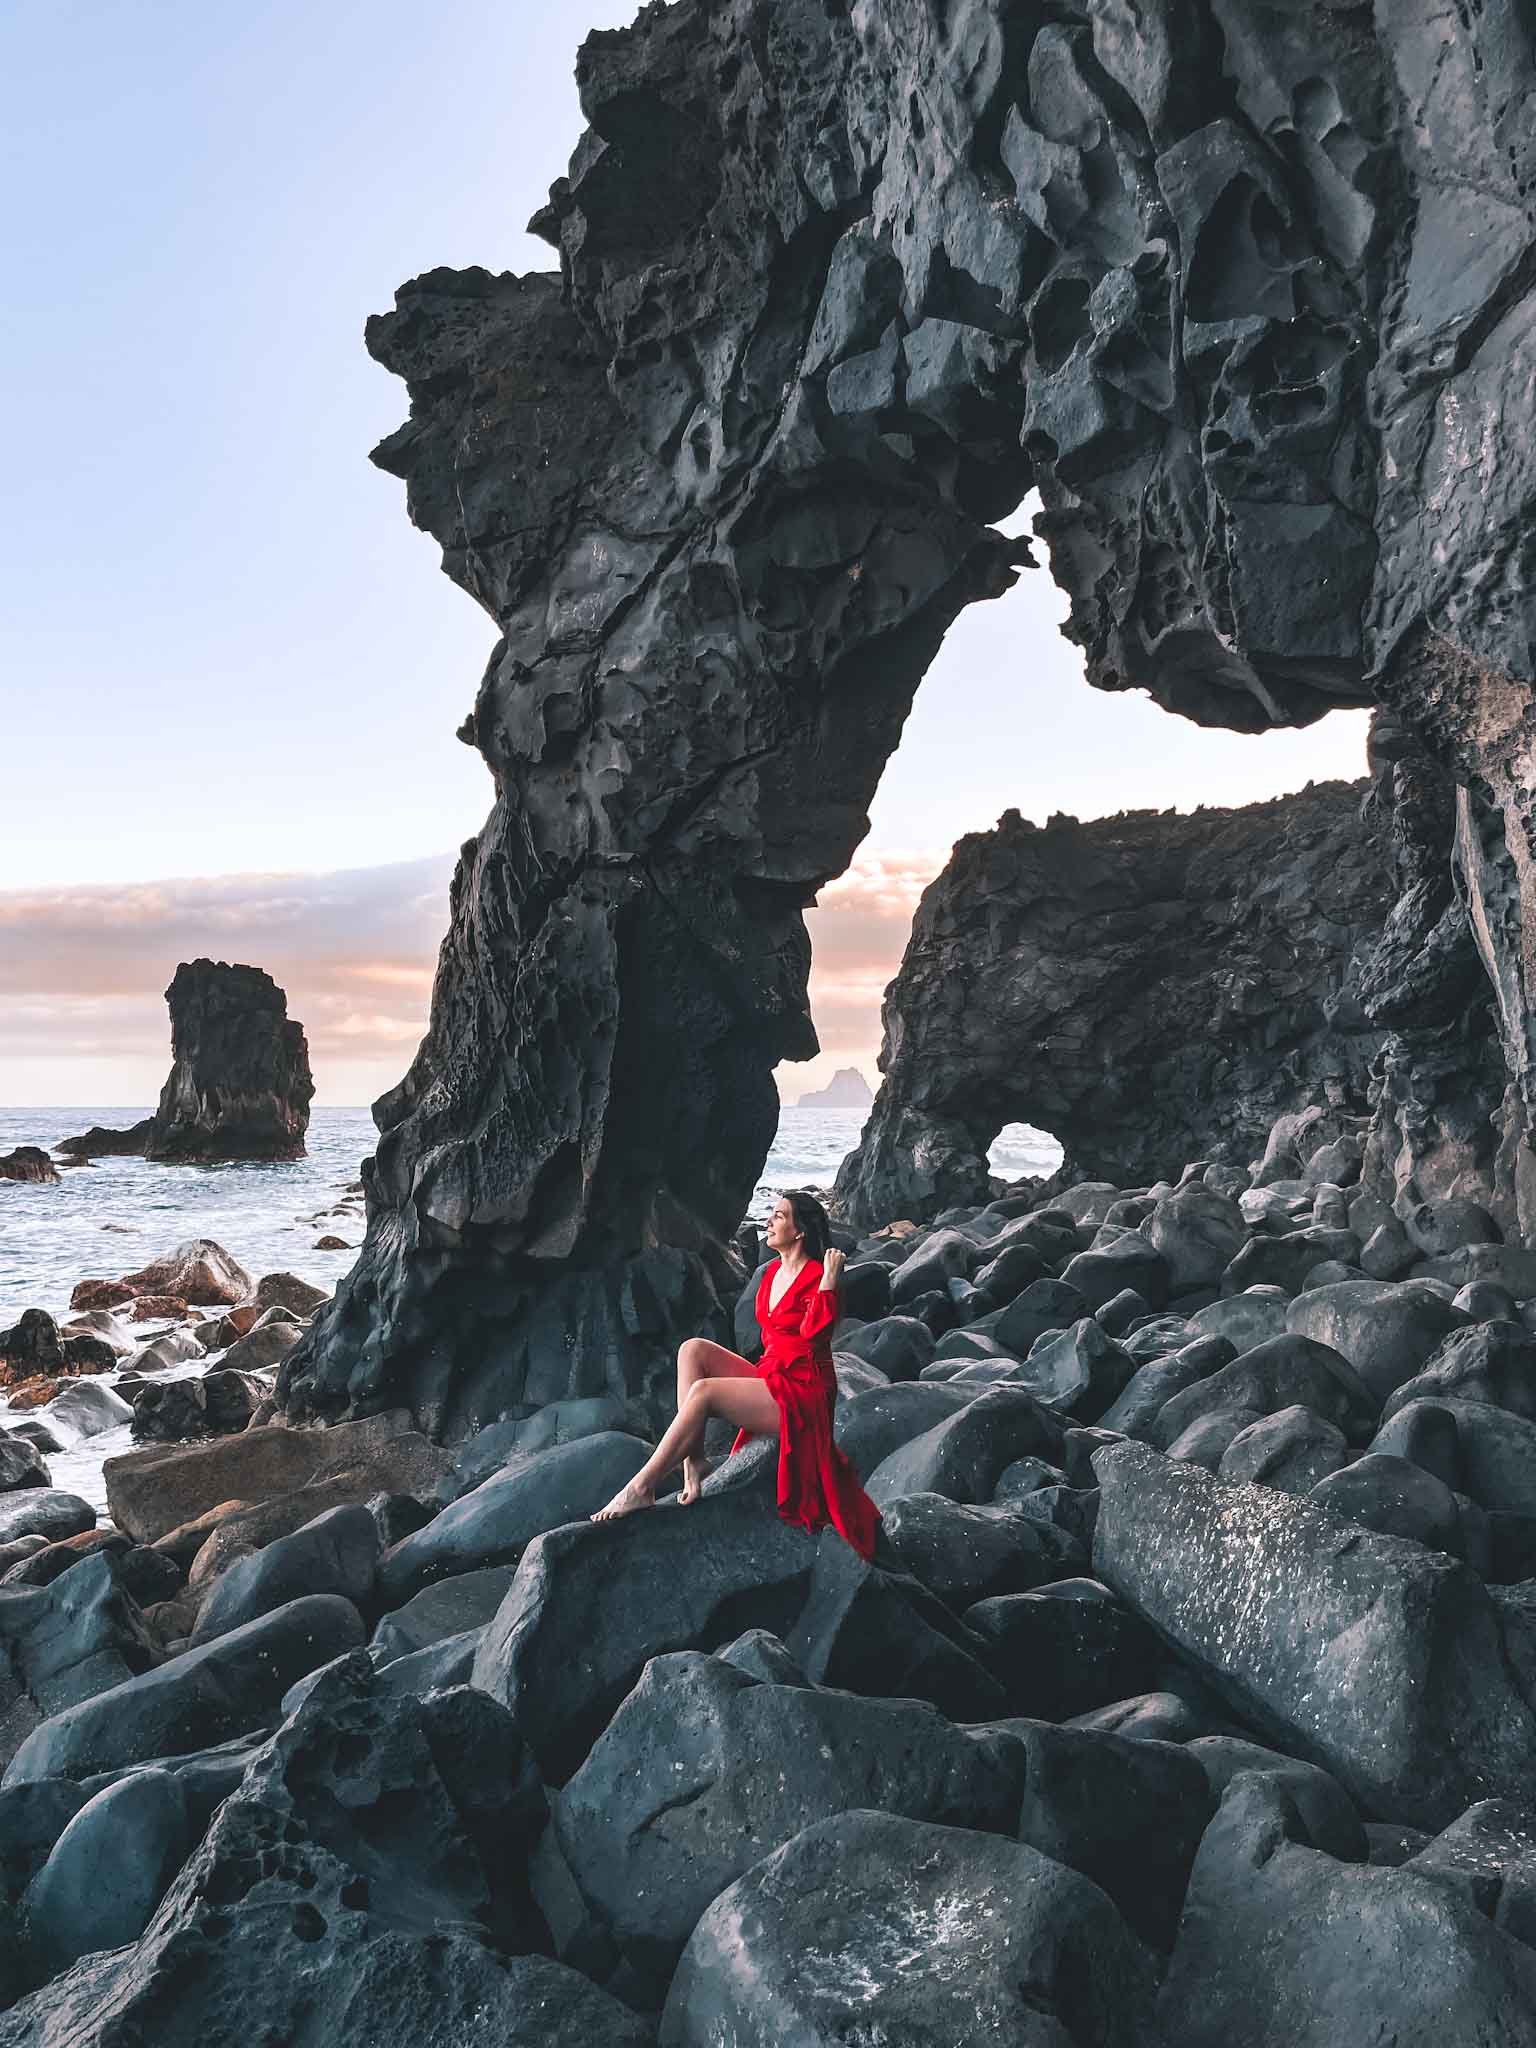 Best Instagram spots in El Hierro Canary Islands - Punta del Pozo volcanic arches